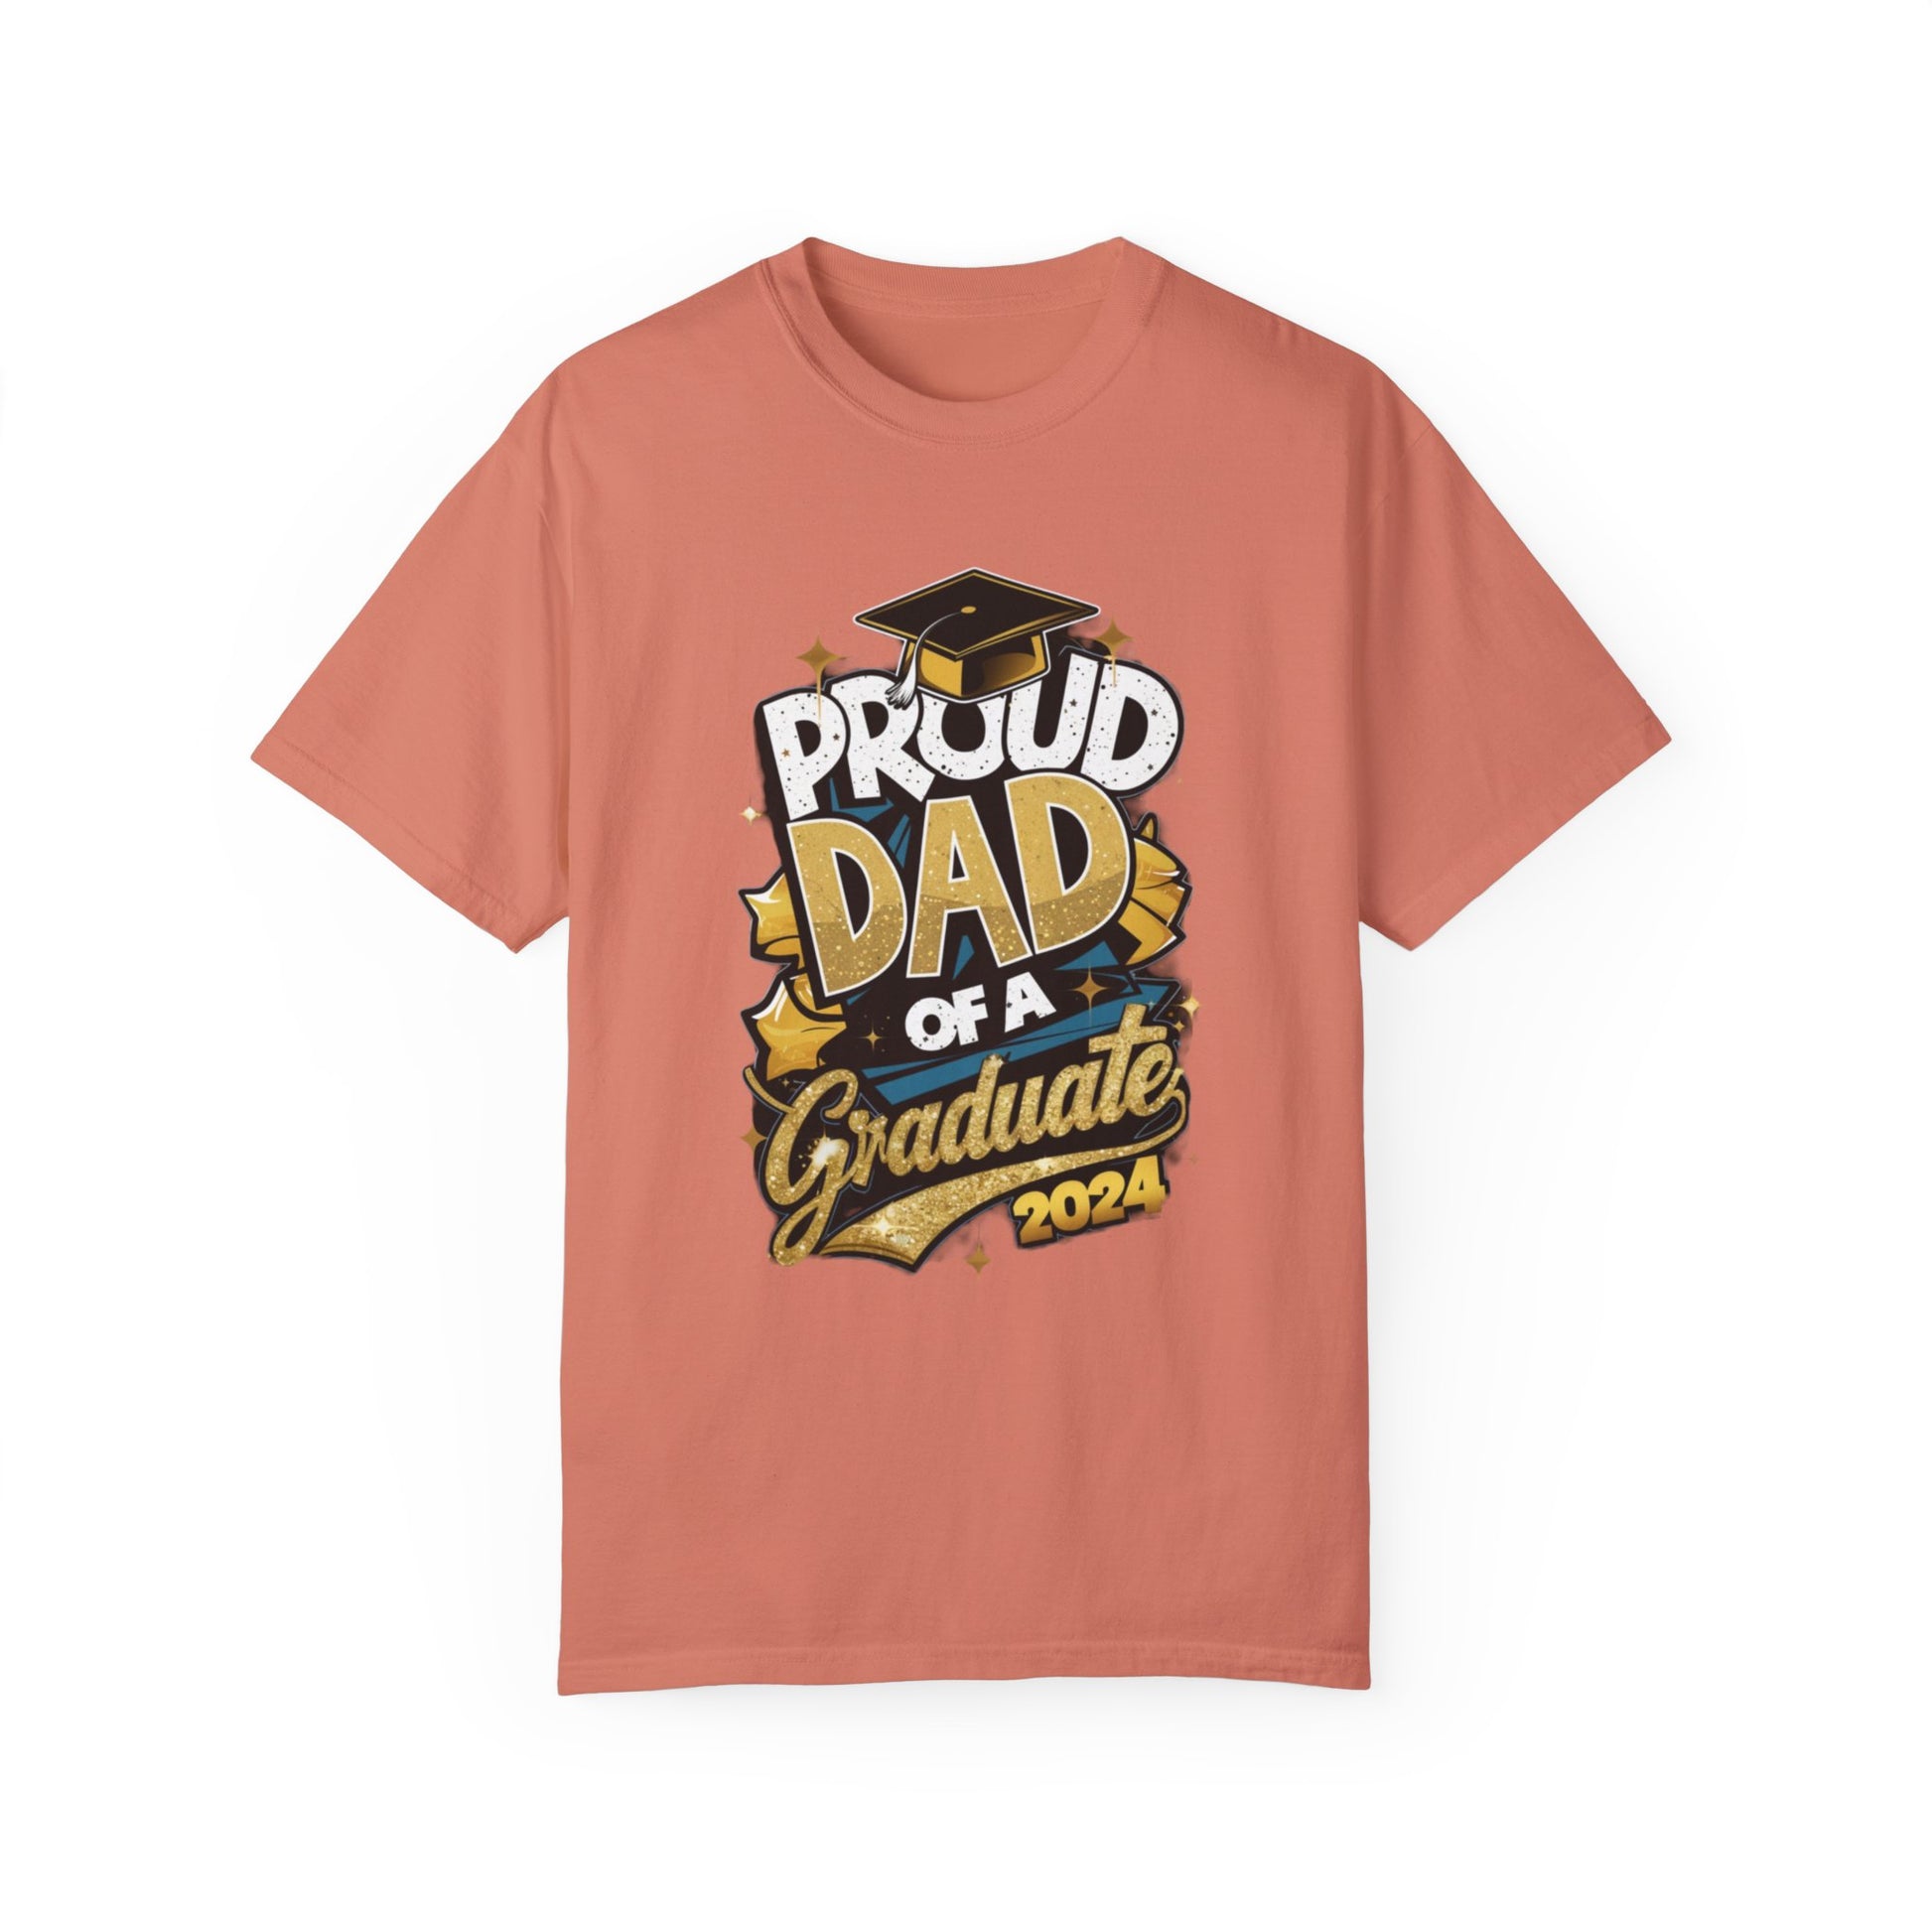 Proud Dad of a 2024 Graduate Unisex Garment-dyed T-shirt Cotton Funny Humorous Graphic Soft Premium Unisex Men Women Terracotta T-shirt Birthday Gift-14